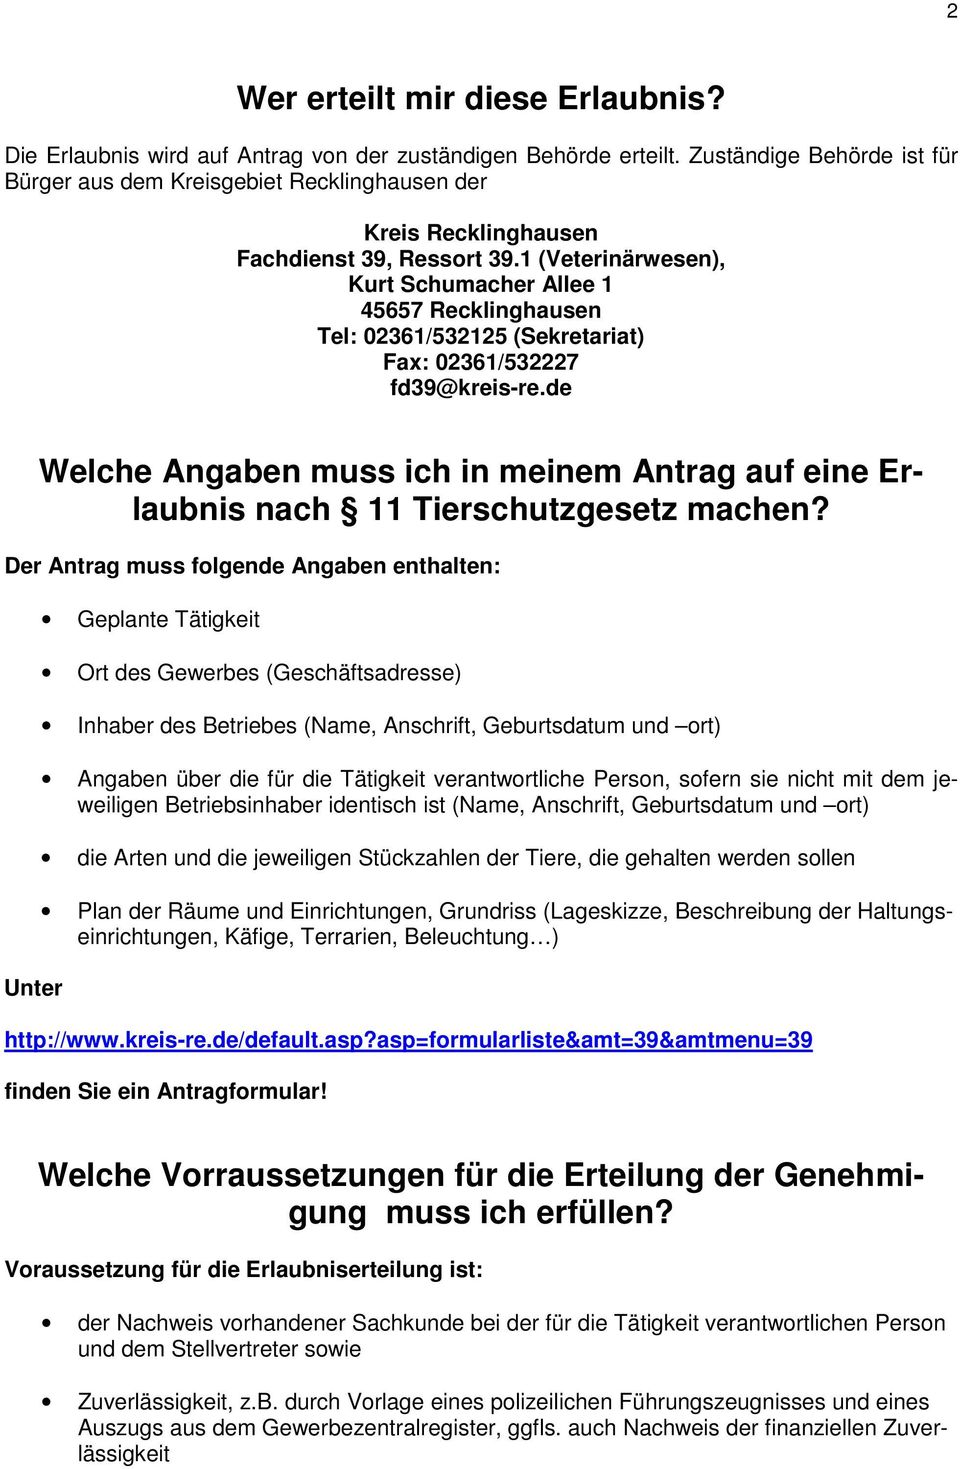 1 (Veterinärwesen), Kurt Schumacher Allee 1 45657 Recklinghausen Tel: 02361/532125 (Sekretariat) Fax: 02361/532227 fd39@kreis-re.